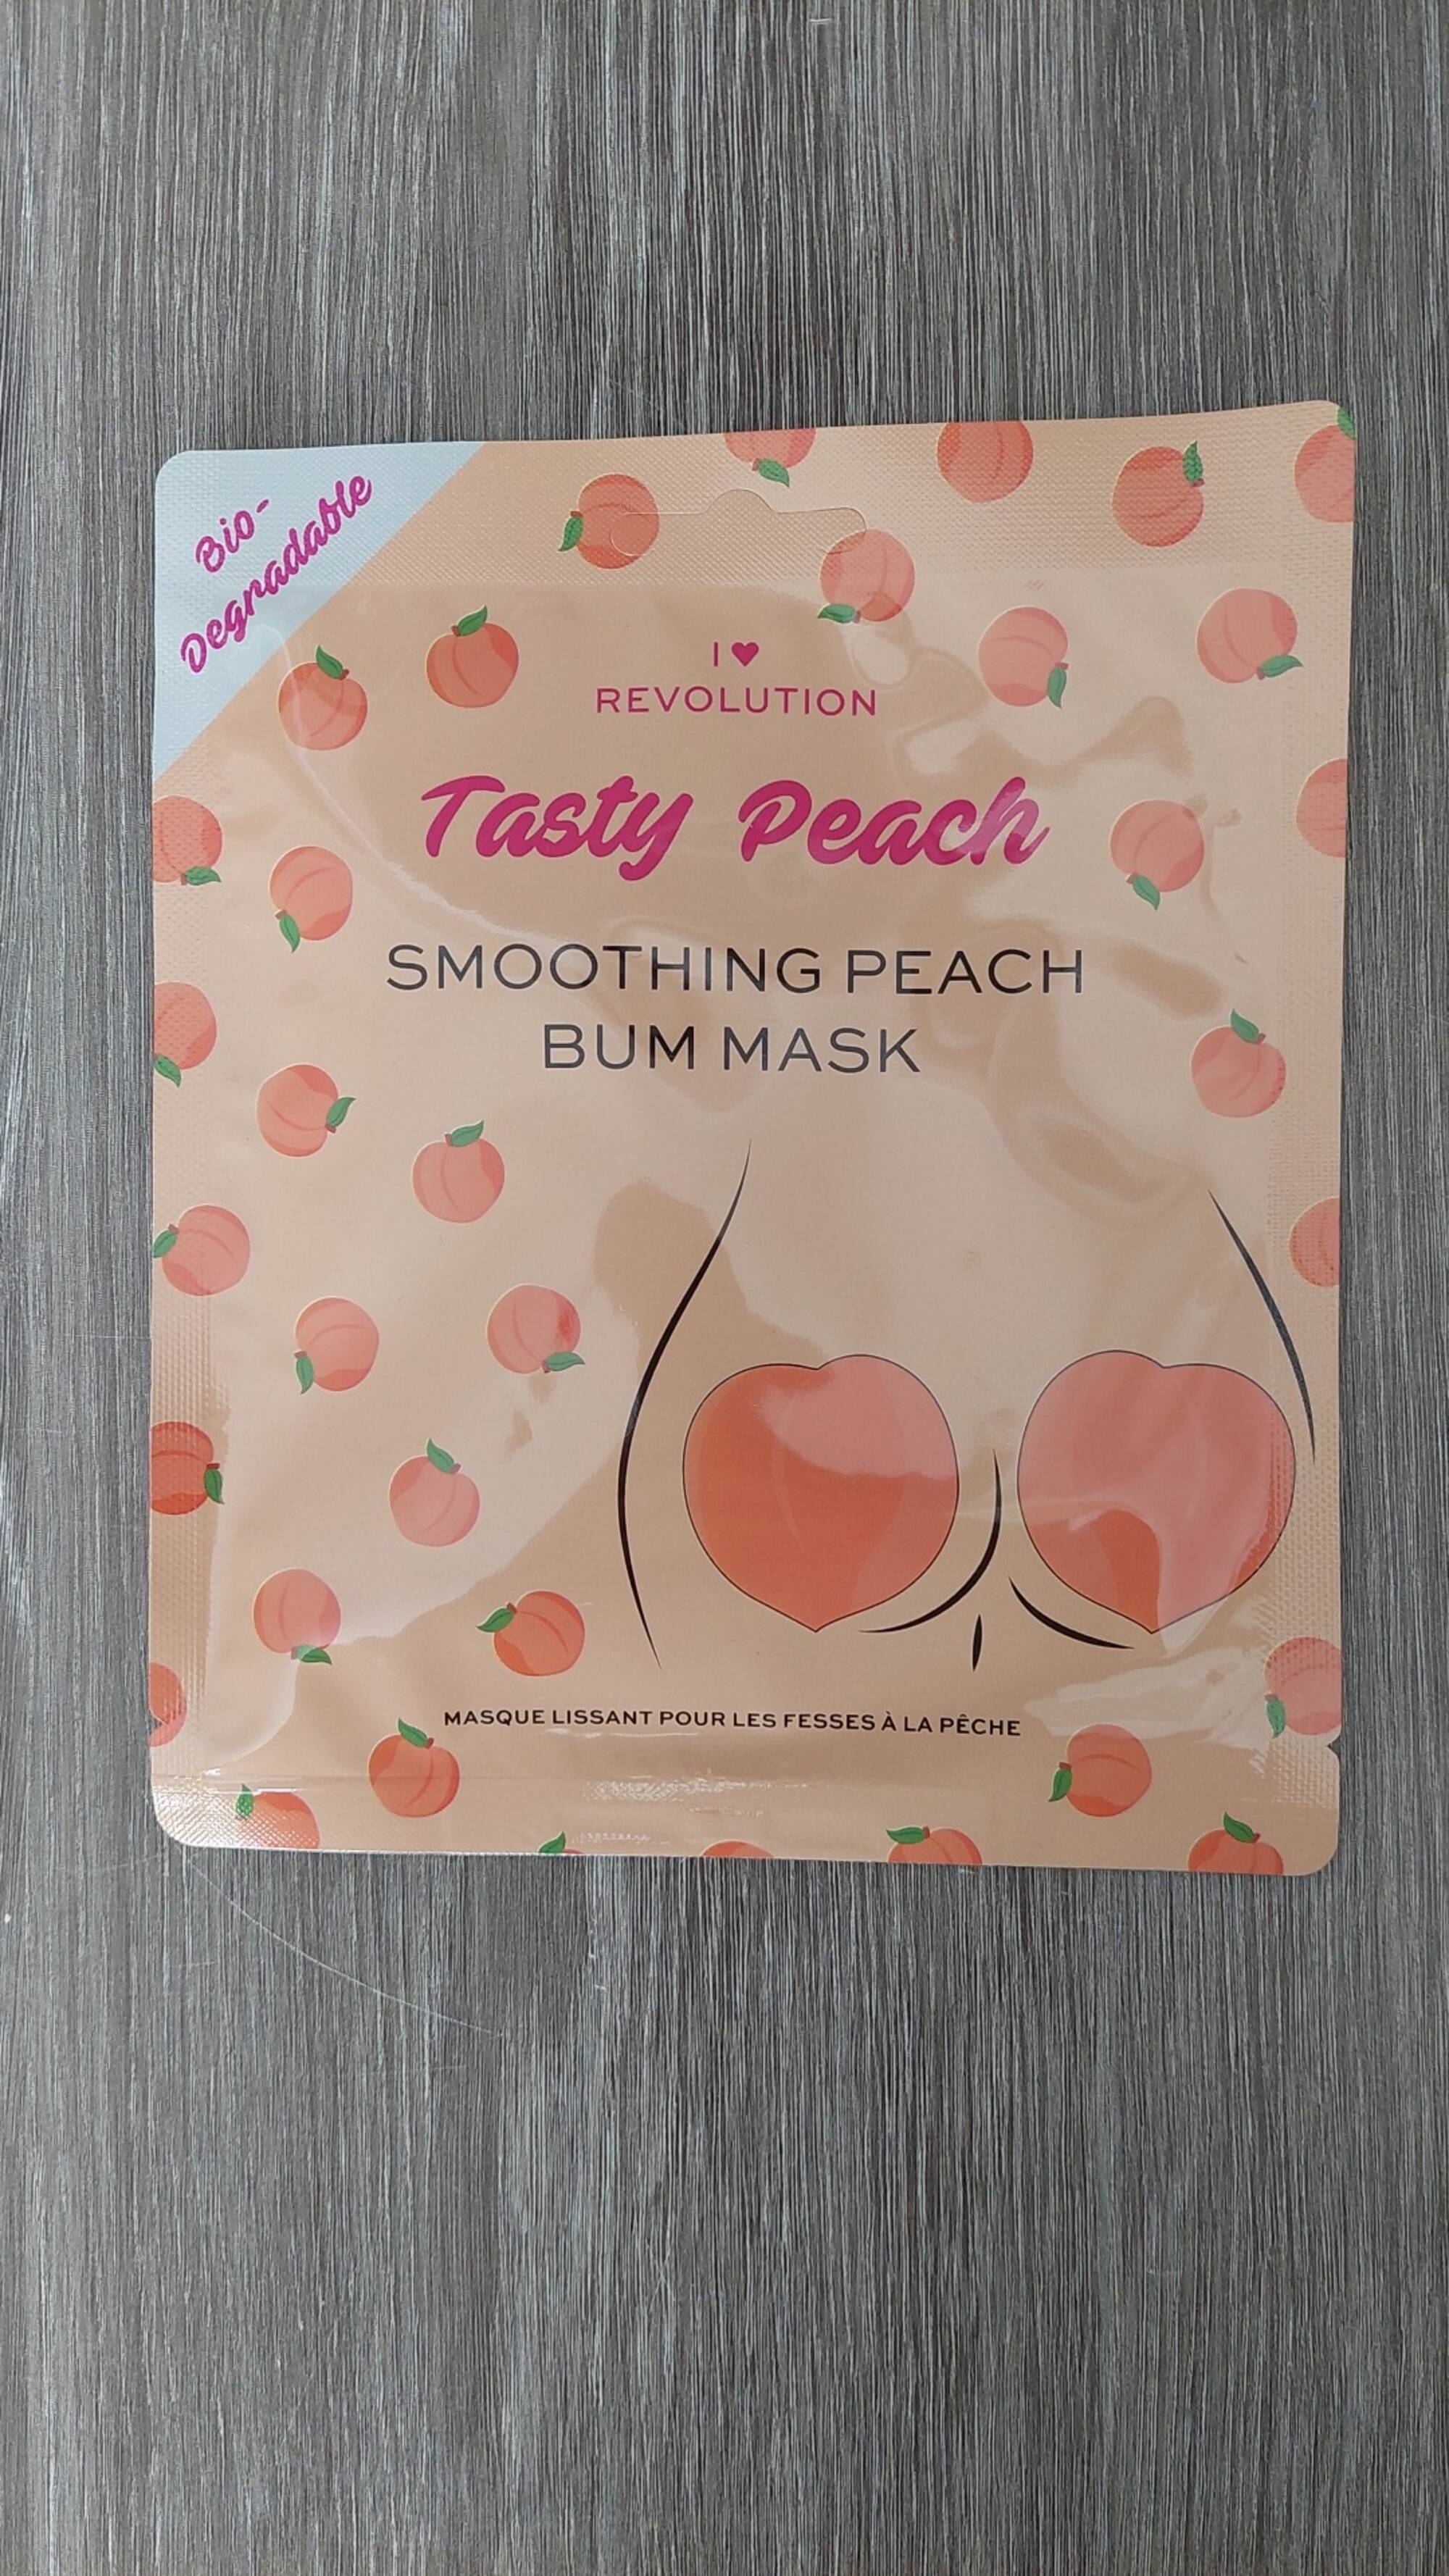 TASTY PEACH - I love revolution - Bum mask